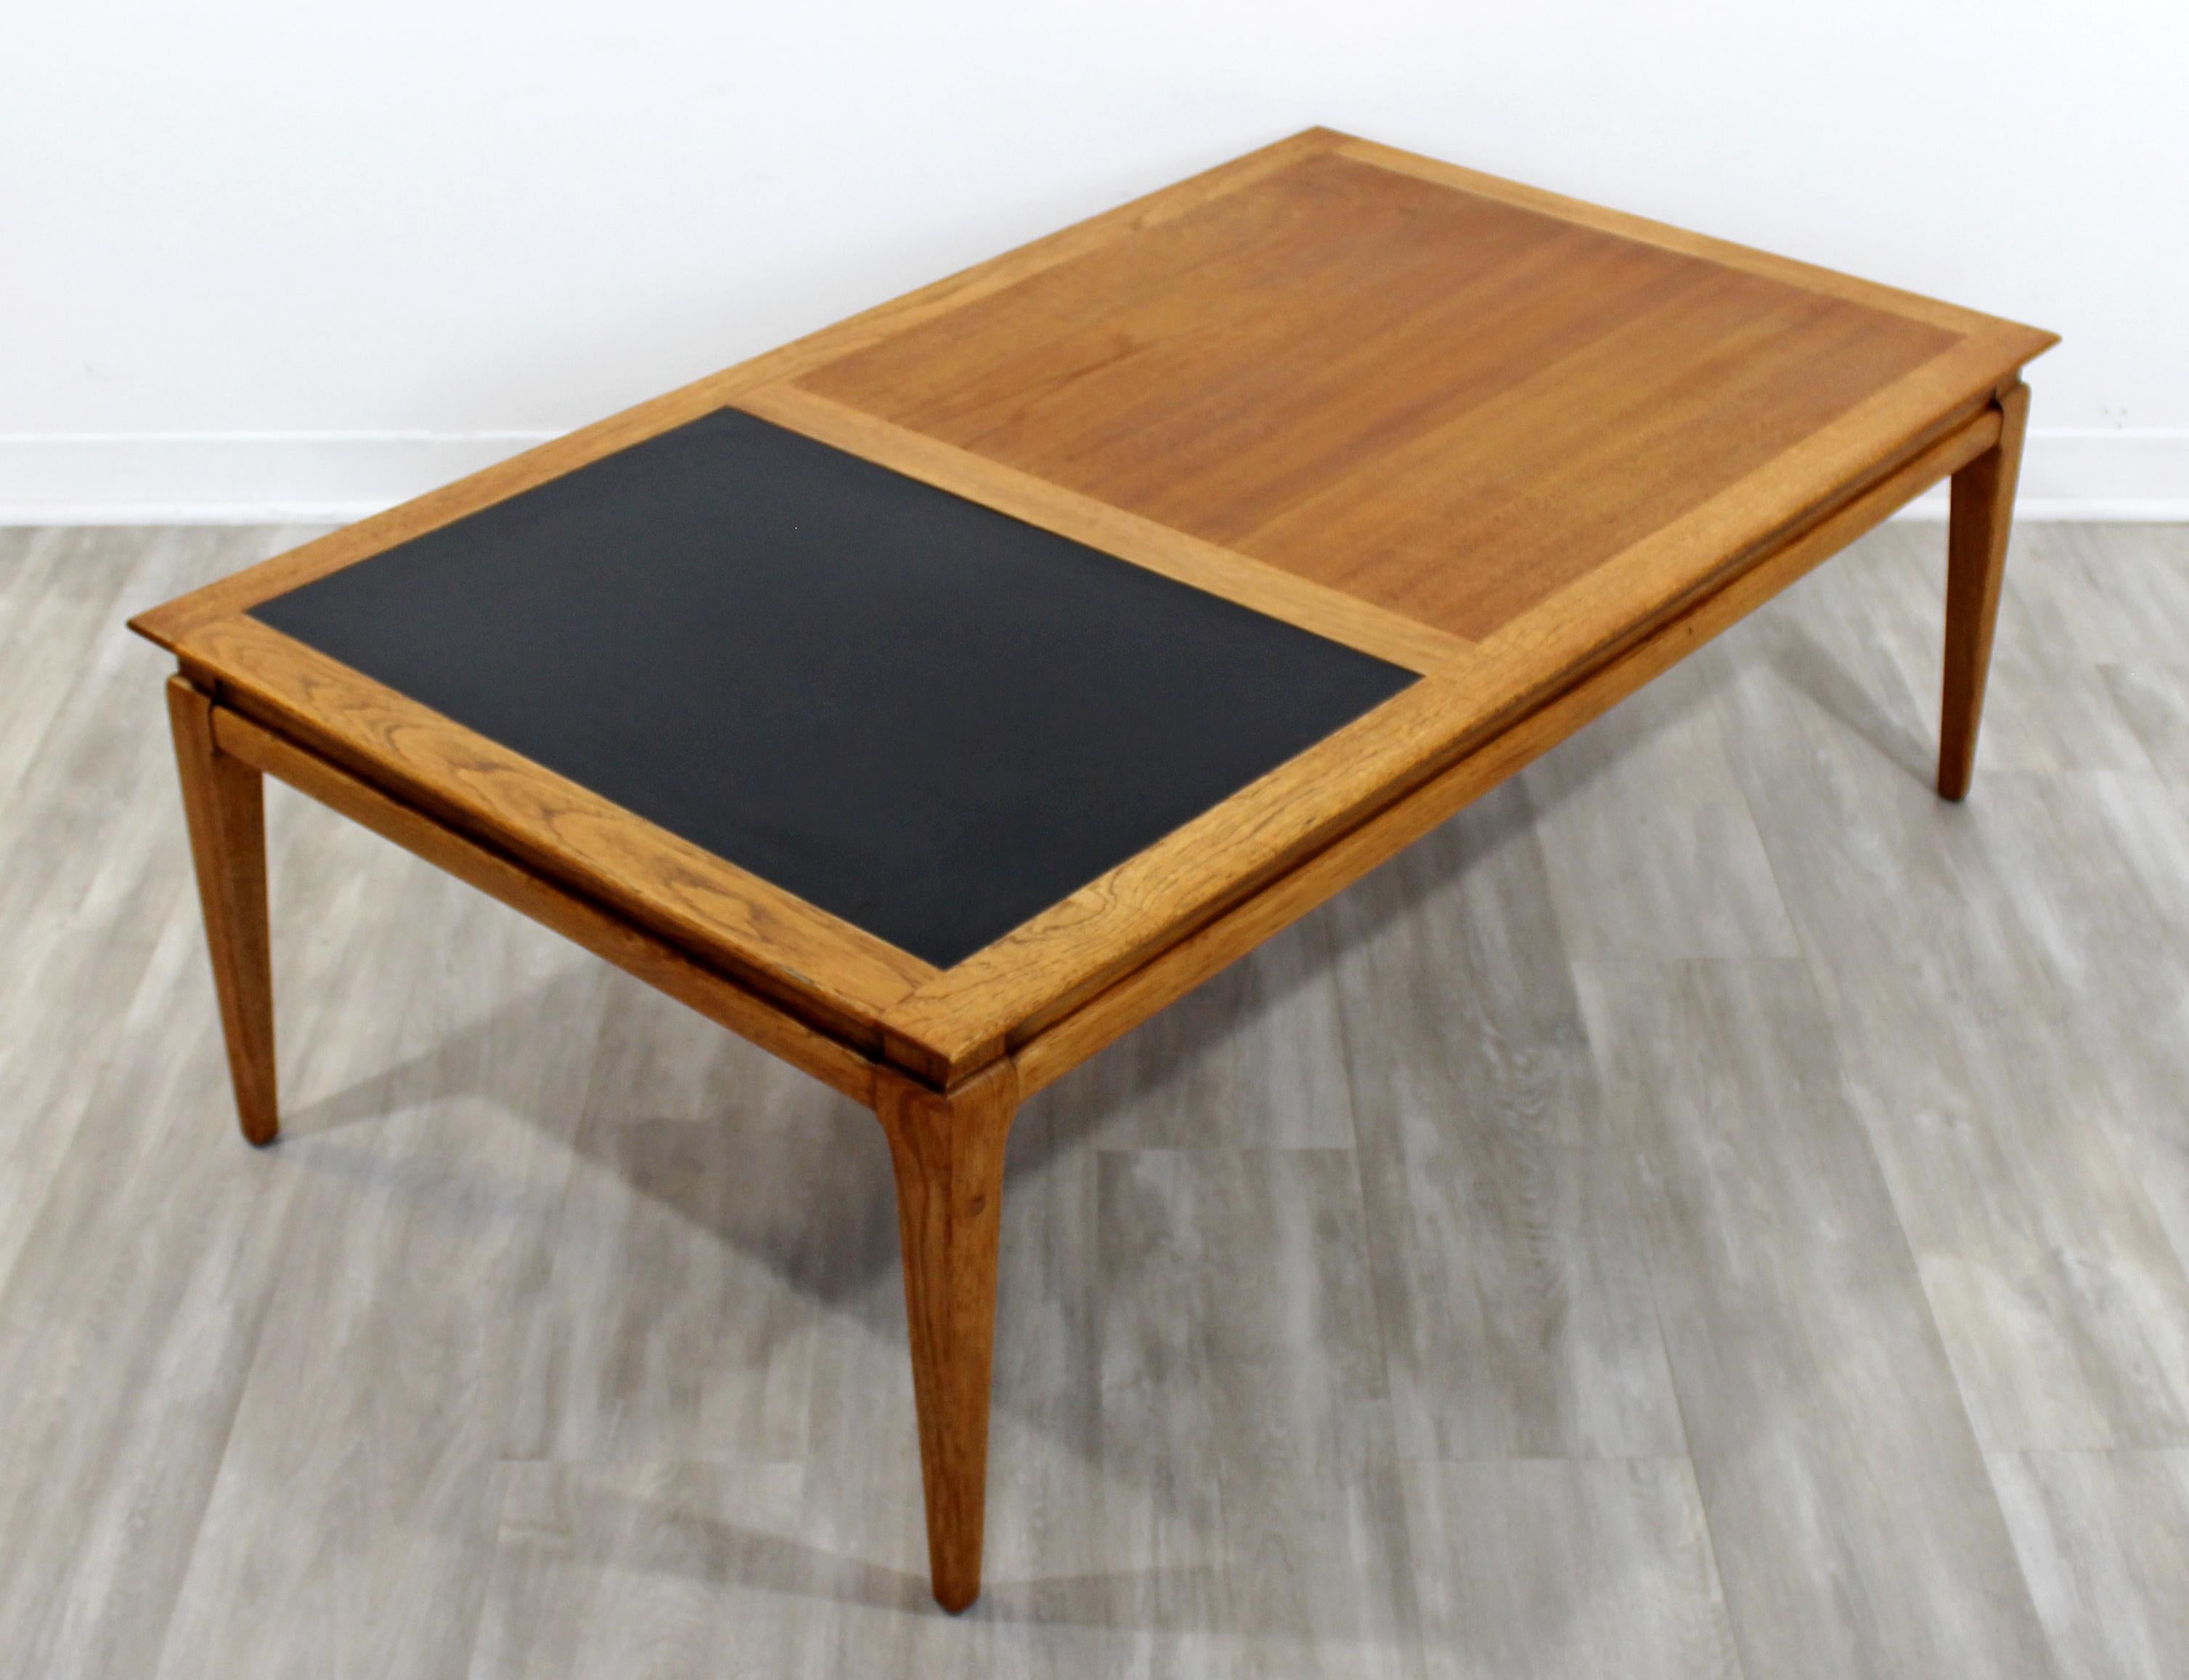 Mid-20th Century Mid-Century Modern Low Rectangular Wood Coffee Table with Black Insert Danish